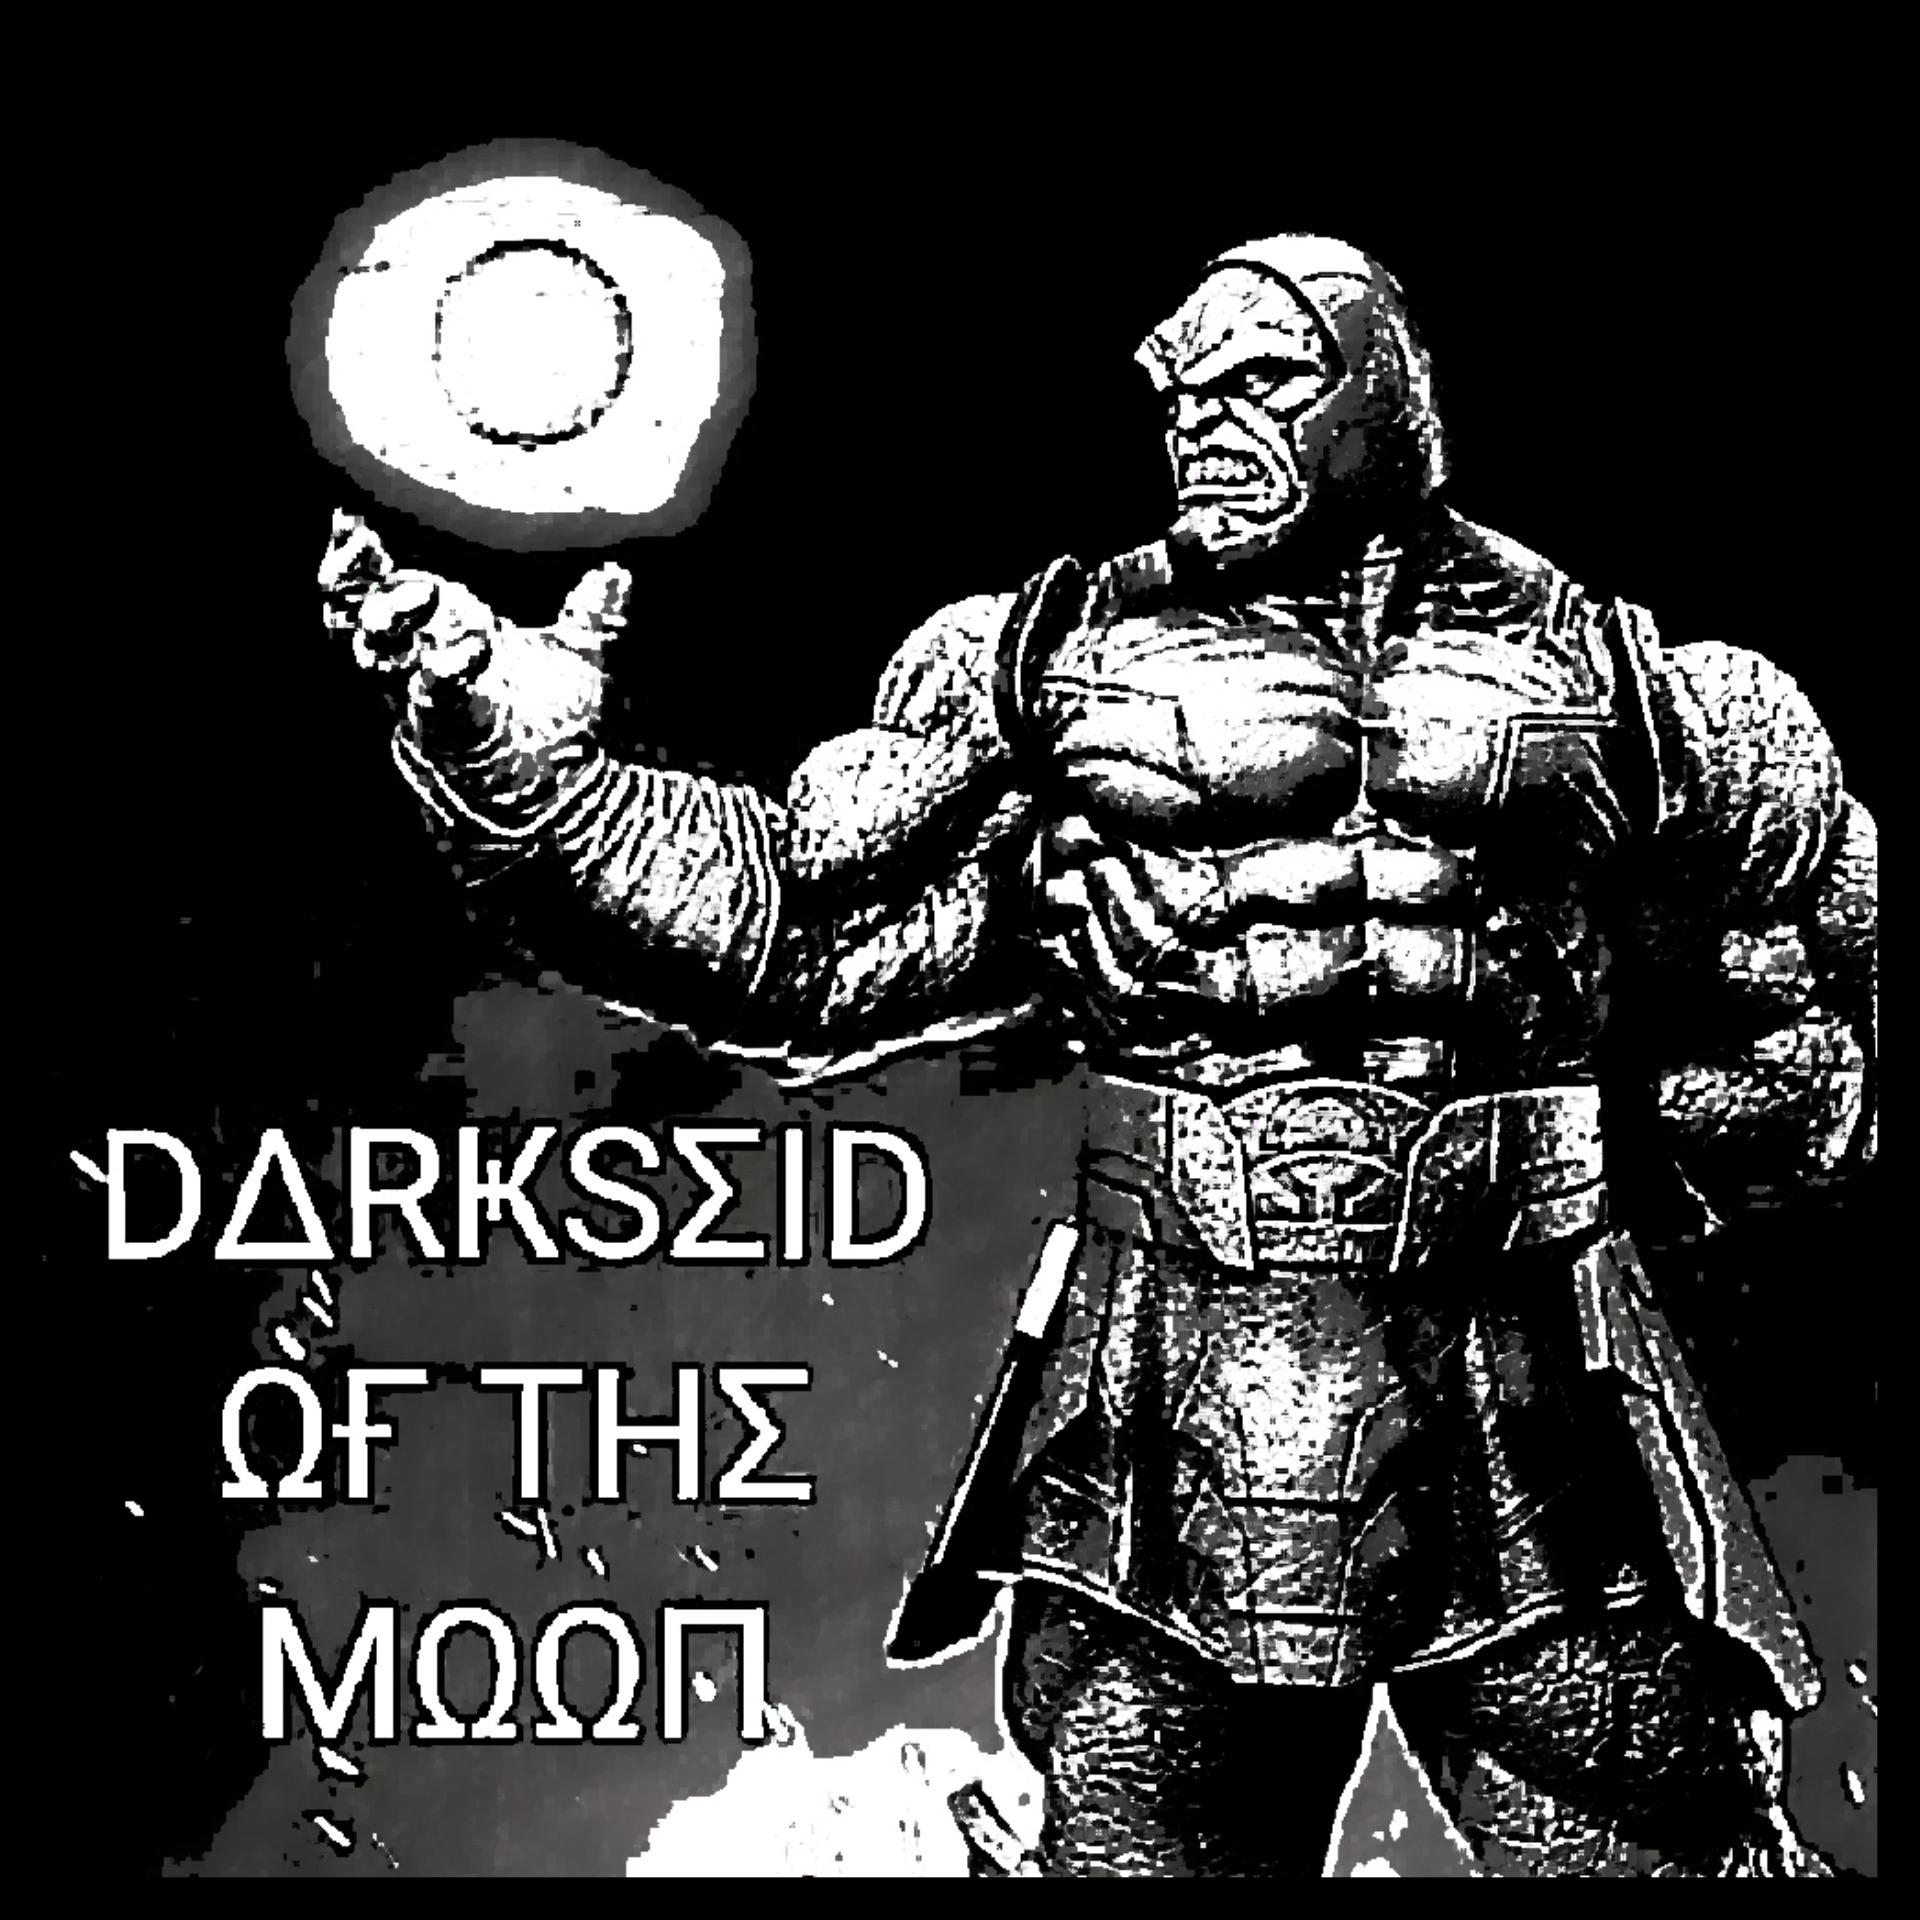 Darkseid of the Moon